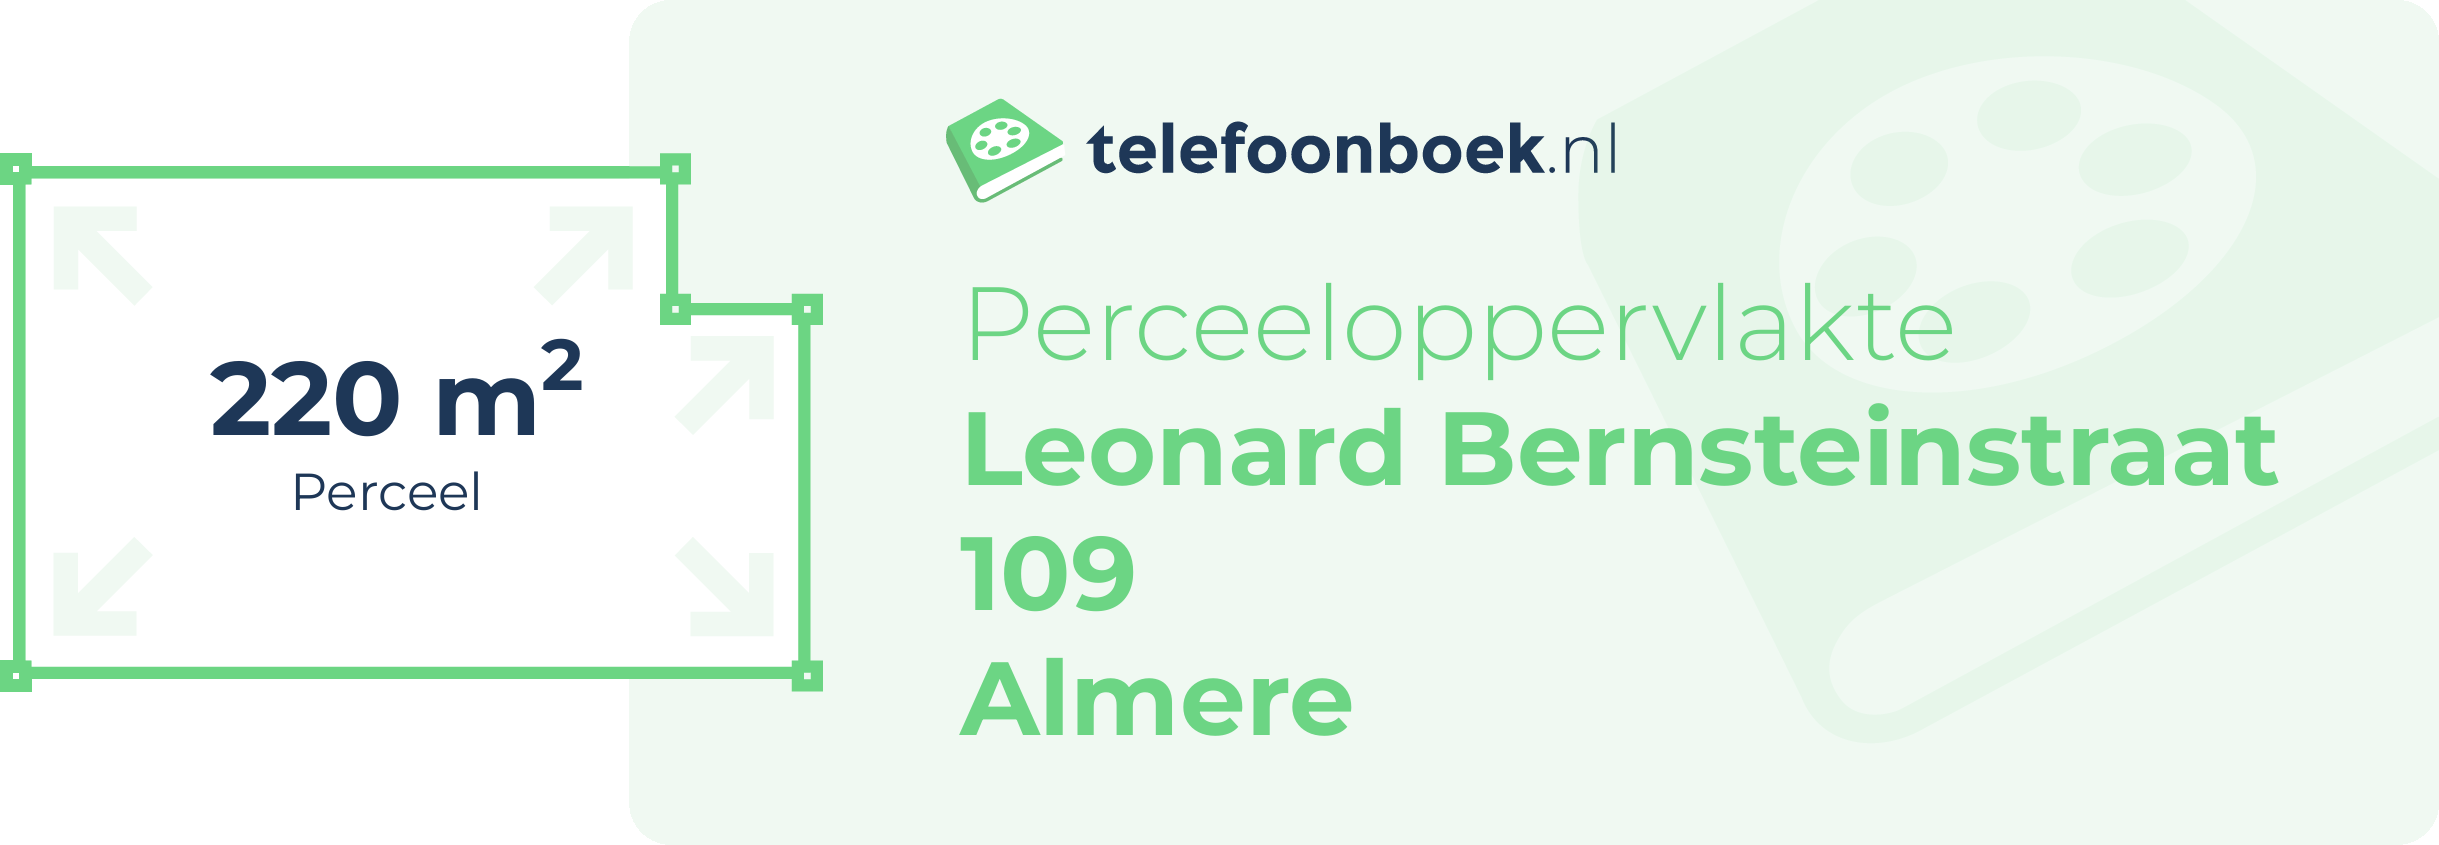 Perceeloppervlakte Leonard Bernsteinstraat 109 Almere